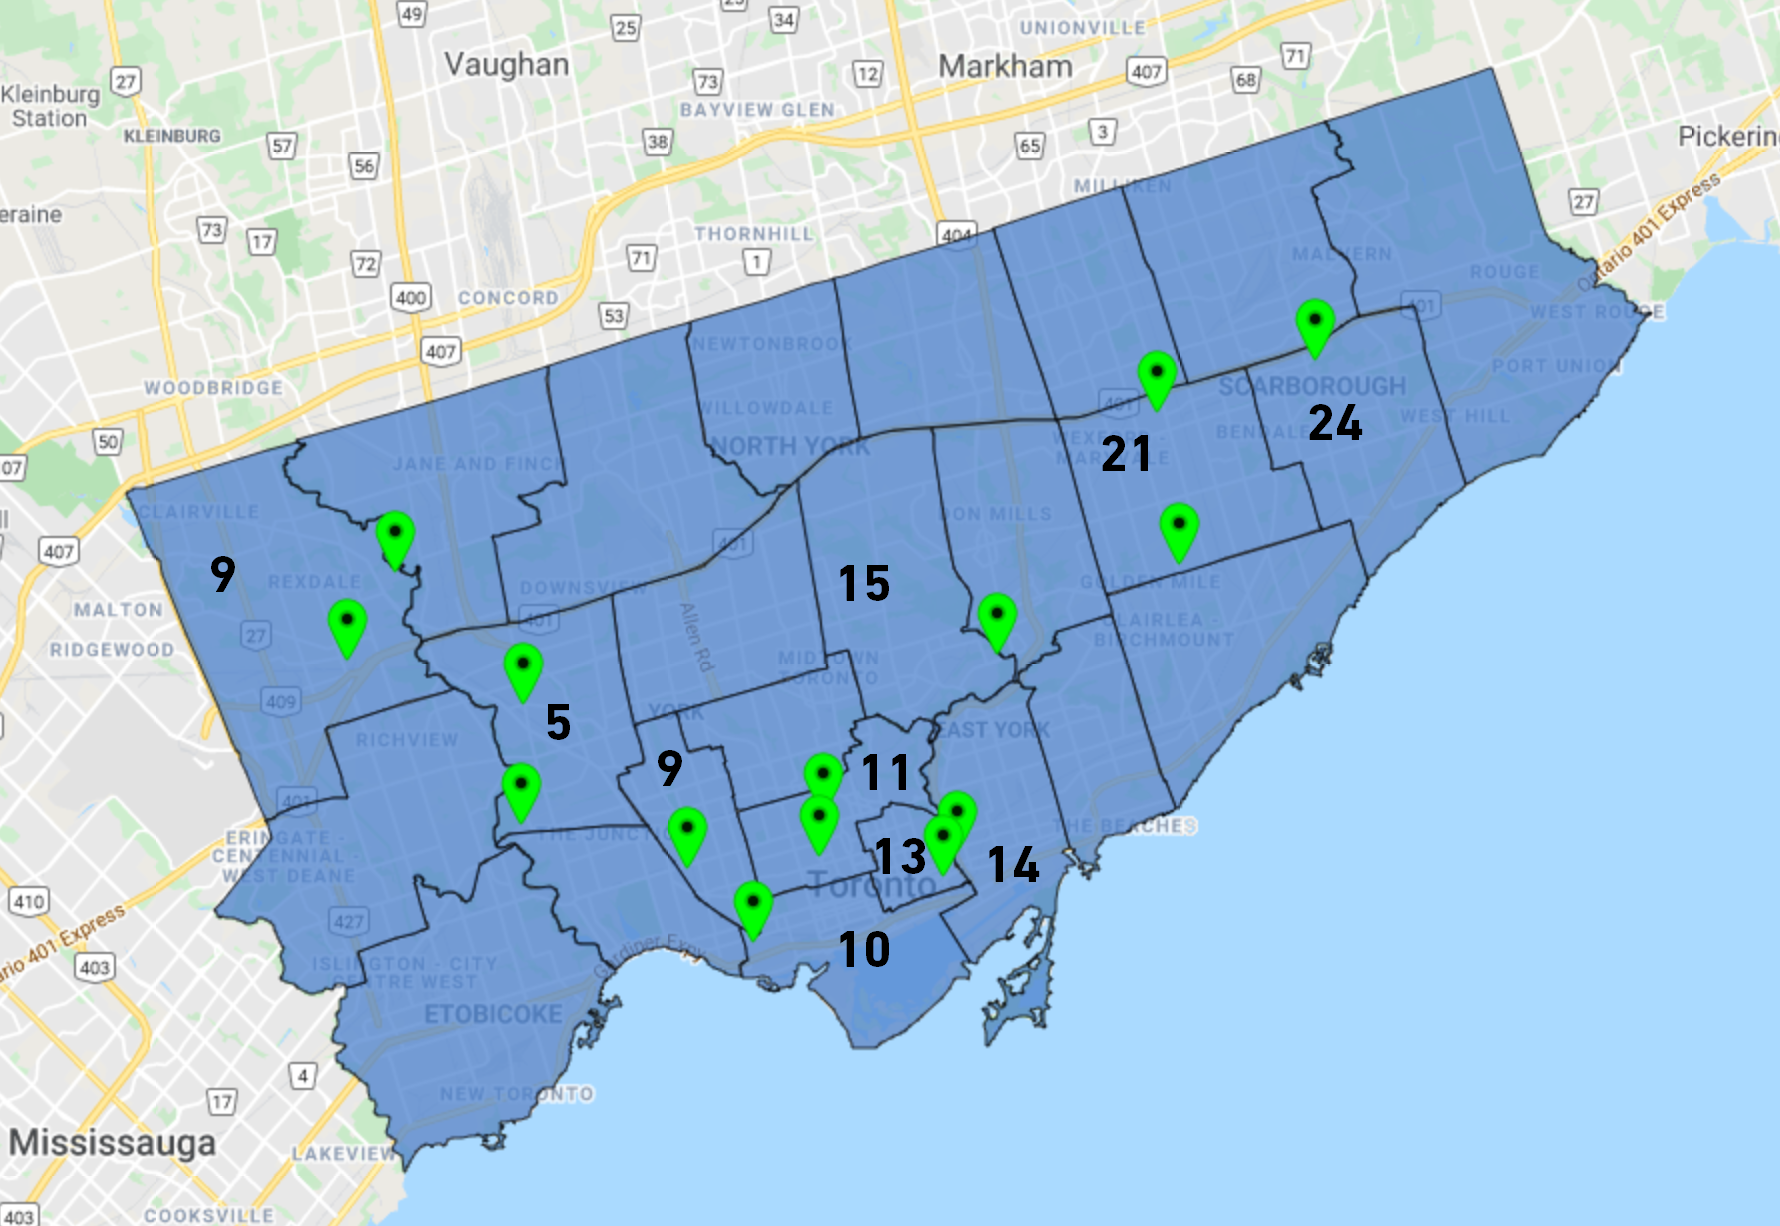 Map of May 2021 developments by Toronto Wards, based on data by UTPro. 